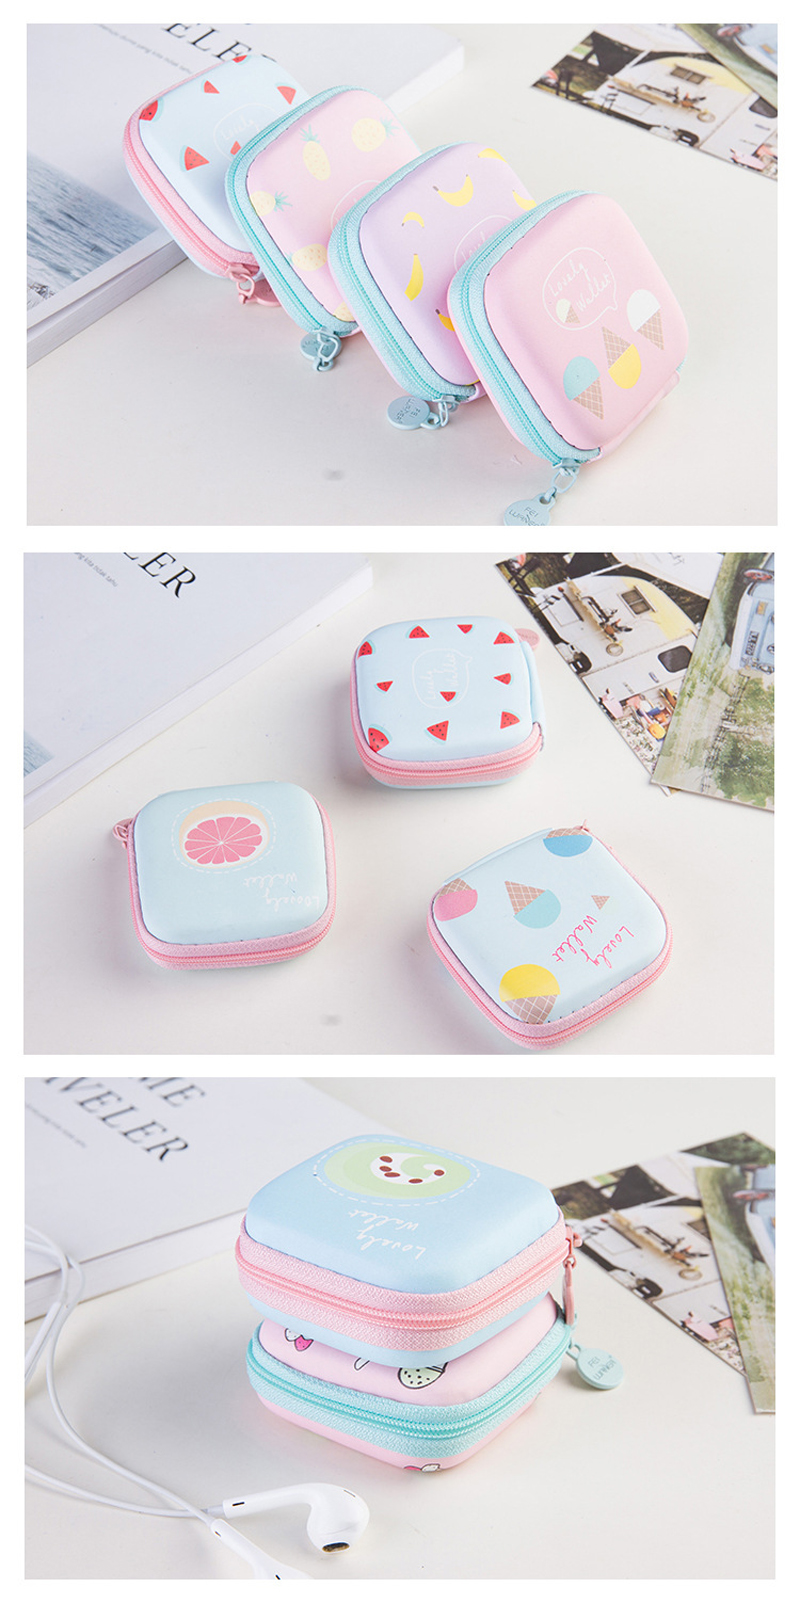 EZONE Stationery Storage Box Kawaii Ice Cream Pineapple Printed Paper Clip Bookmark Eraser Cases Pill Box Office Color Random